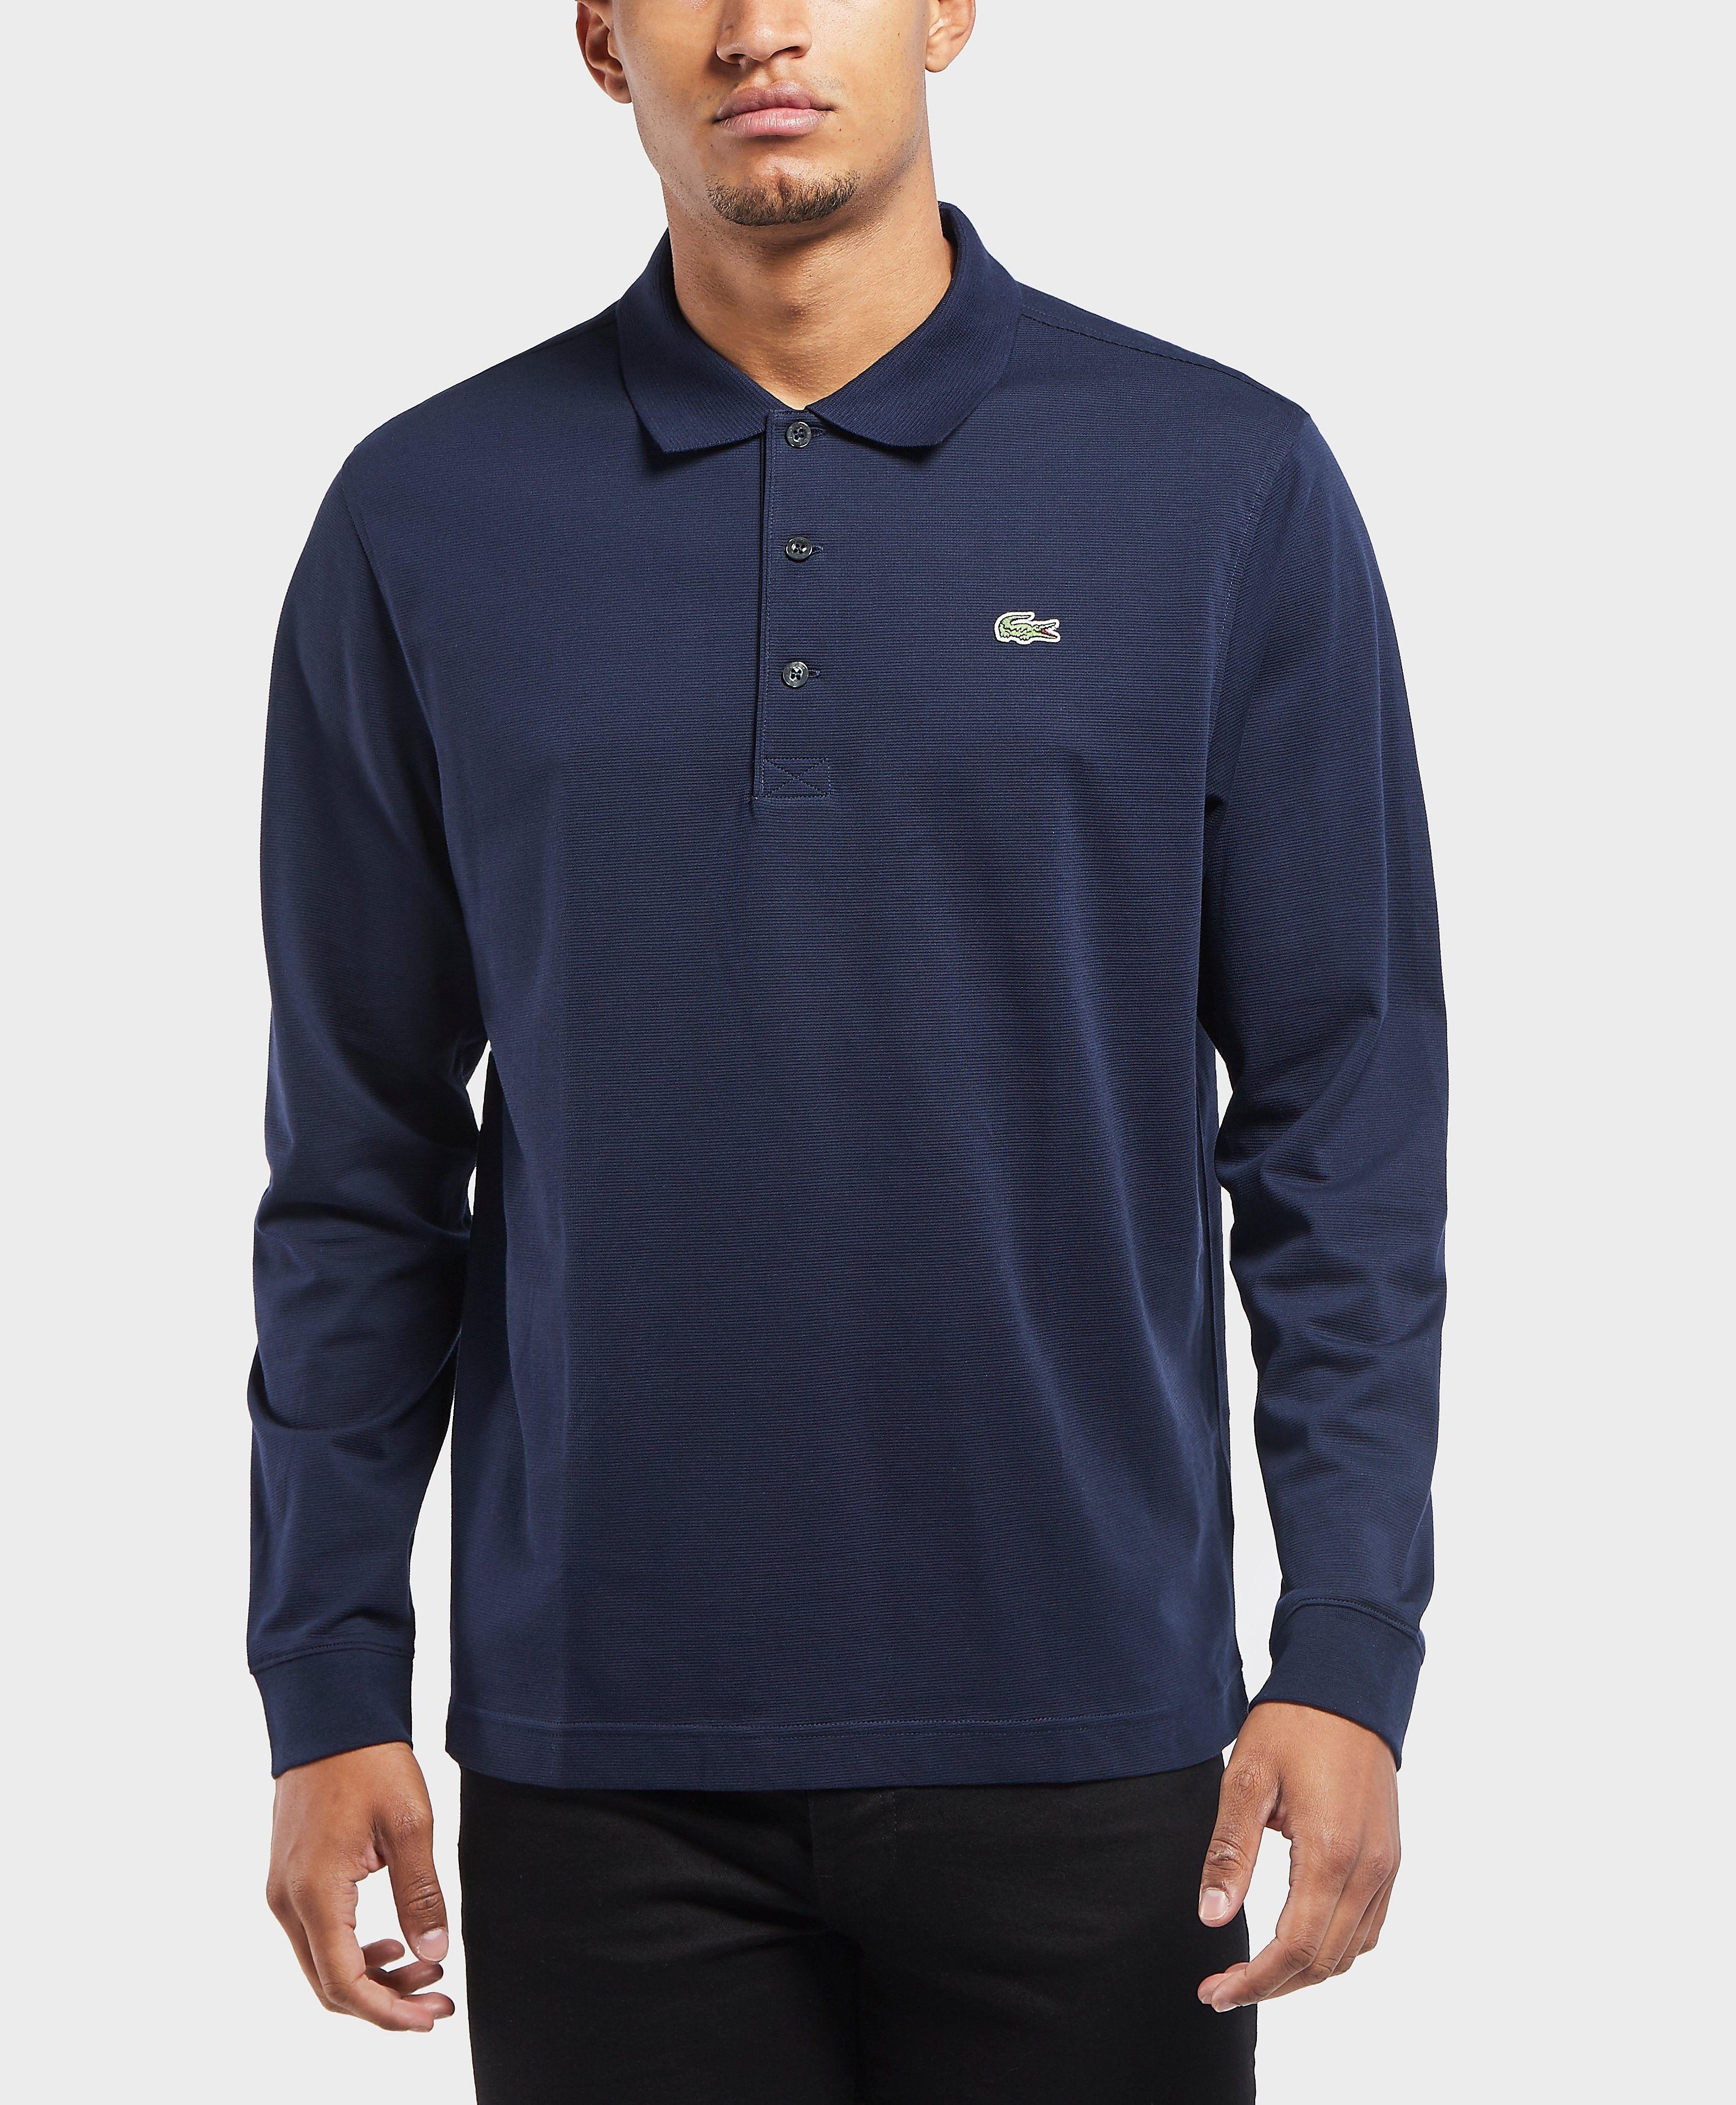 What Company Has Alligator Logo - Lacoste Alligator Long Sleeve Polo Shirt - Navy blue, Navy blue ...